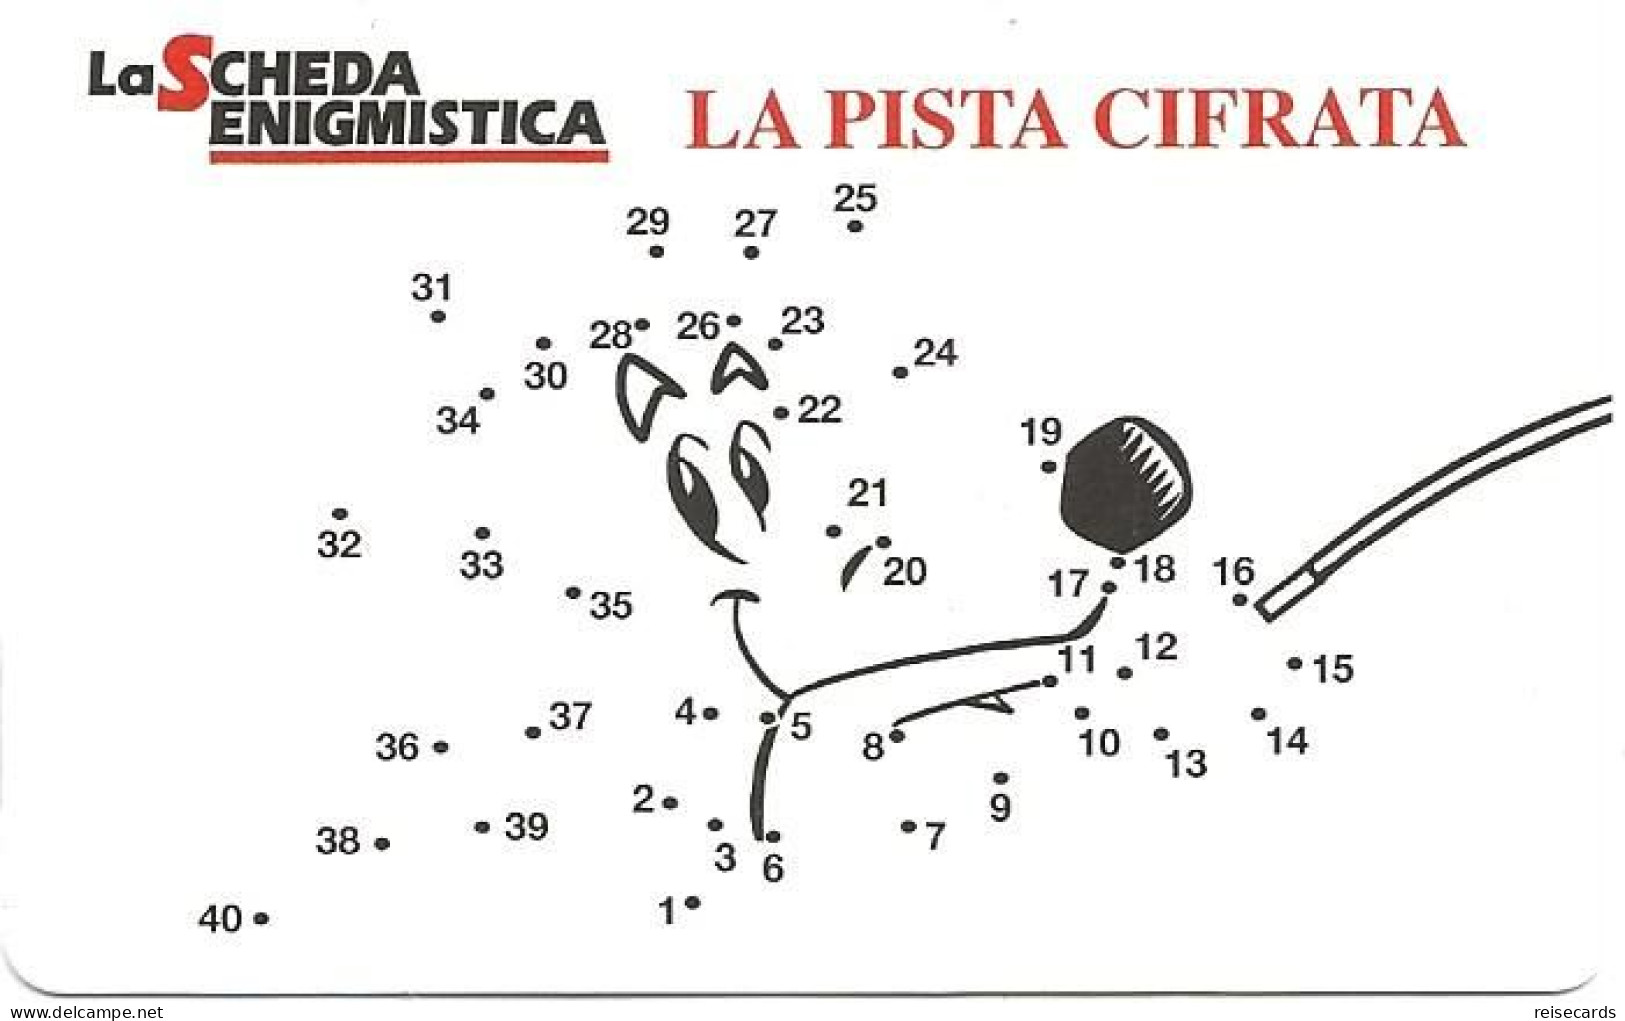 Italy: Telecom Italia - La Scheda Enigmistica, La Pista Cifrata - Publiques Publicitaires